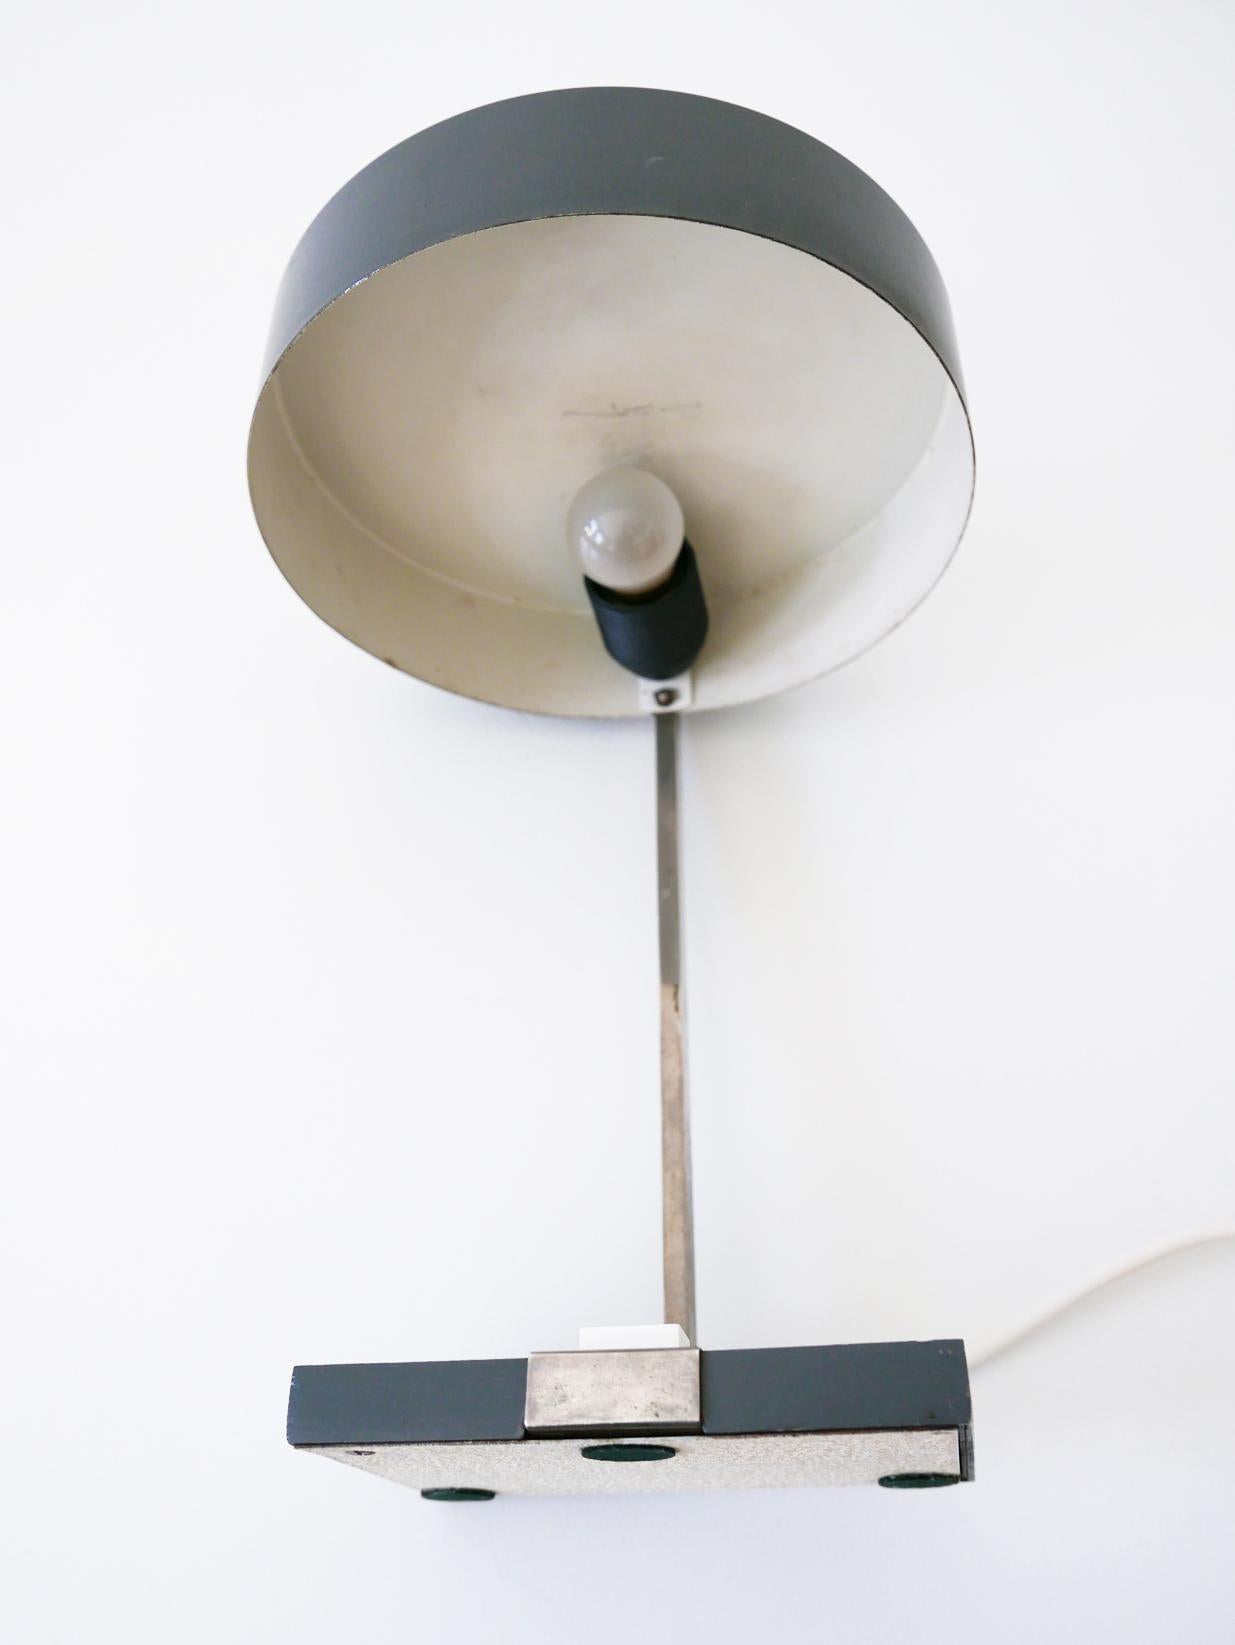 Elegant Mid-Century Modern Table Lamp or Desk Light by Hillebrand, 1960s Germany For Sale 8